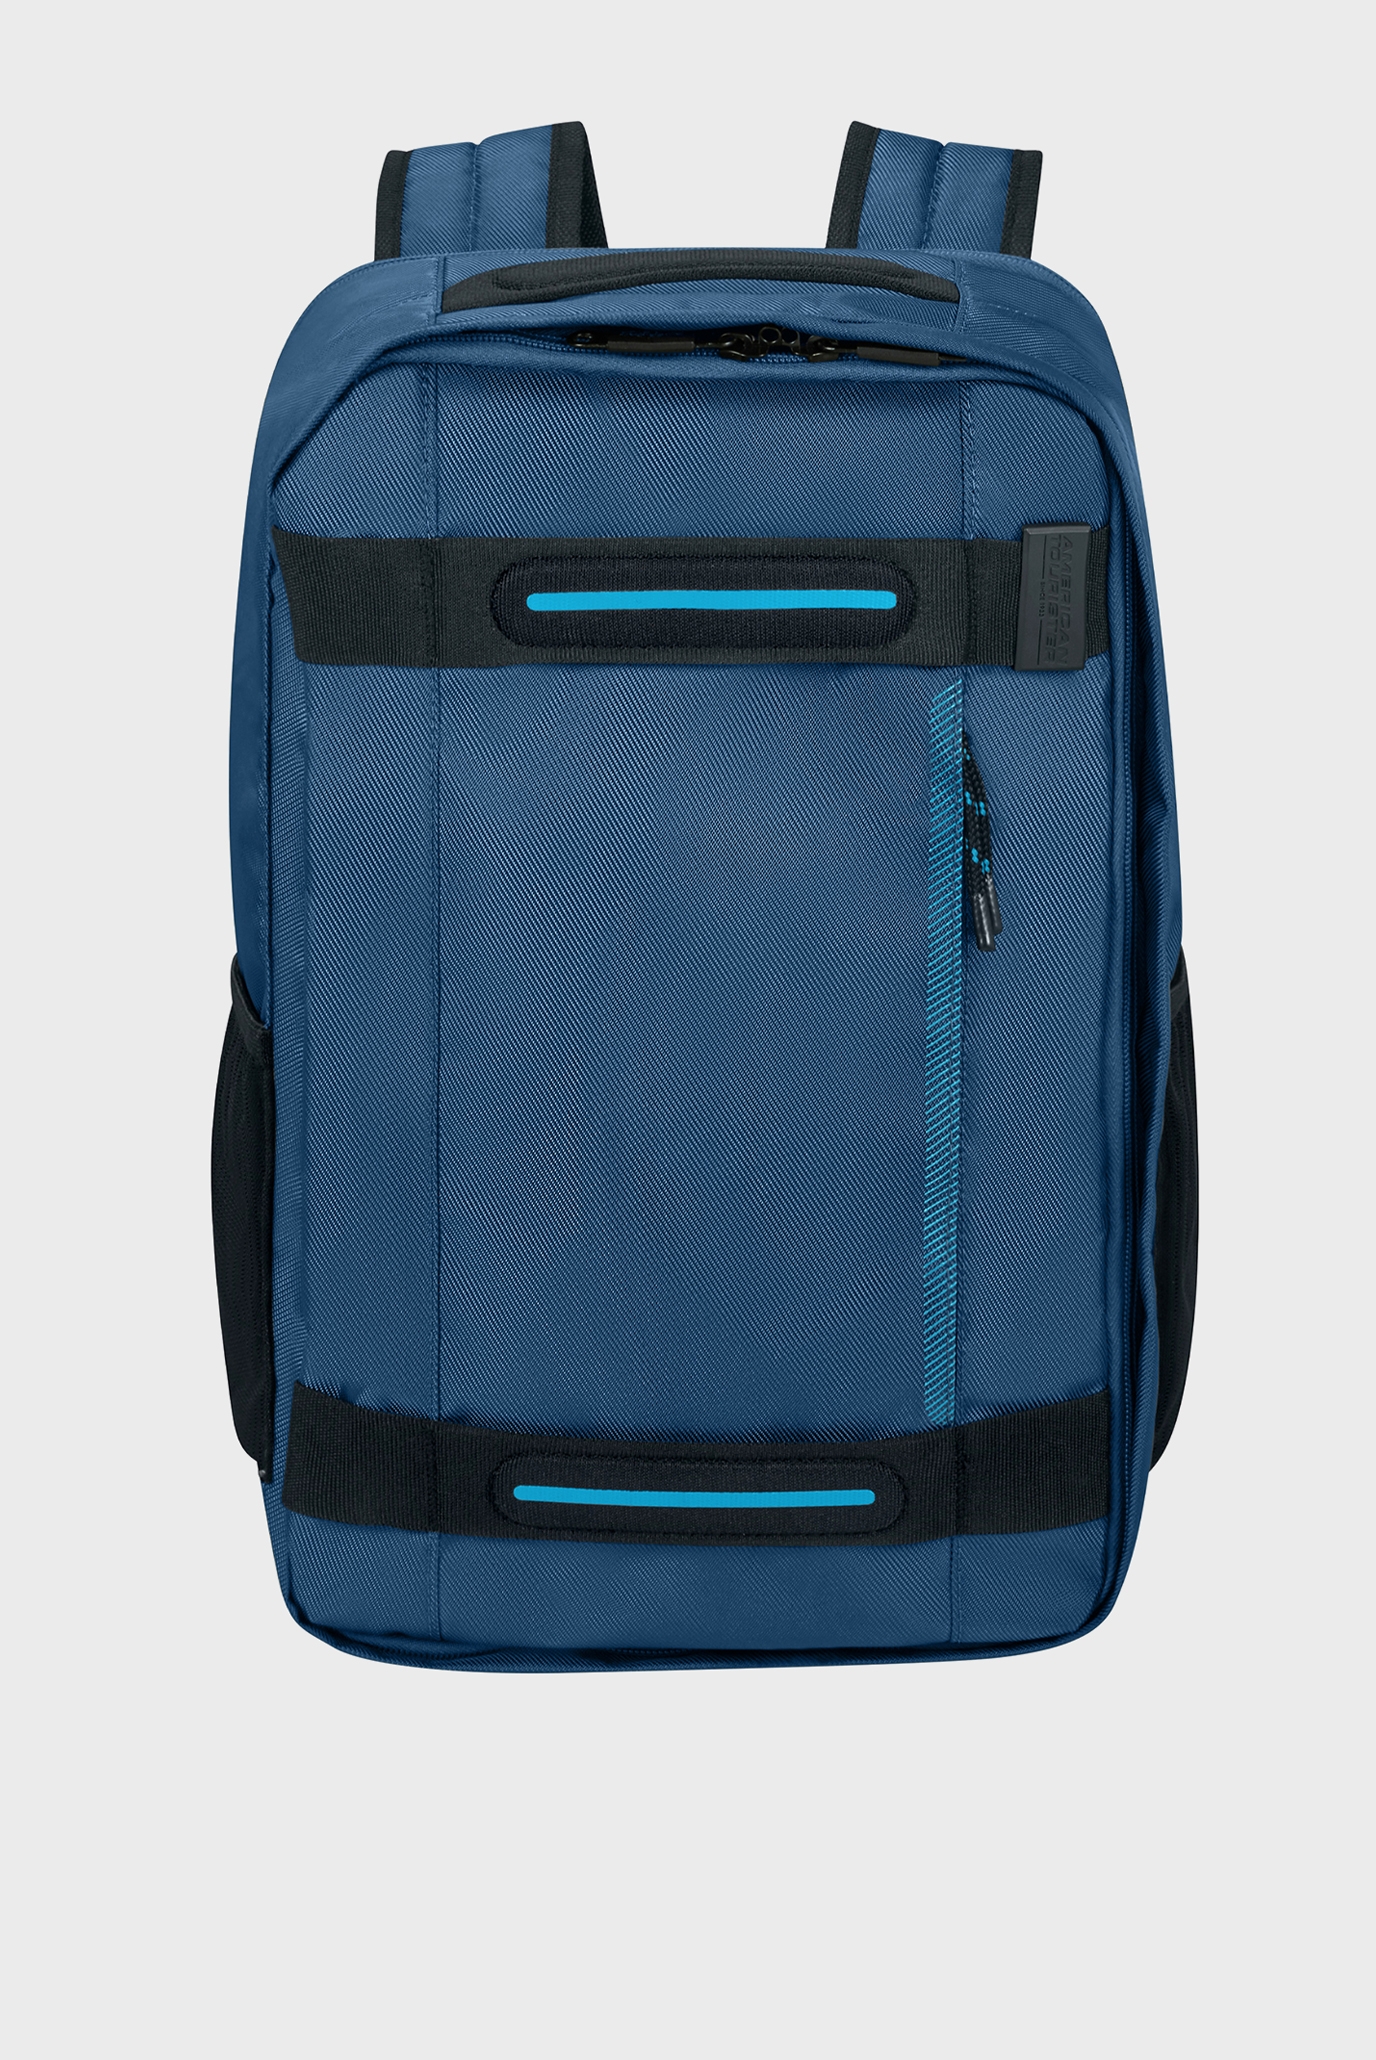 Мужской синий рюкзак URBAN TRACK 1